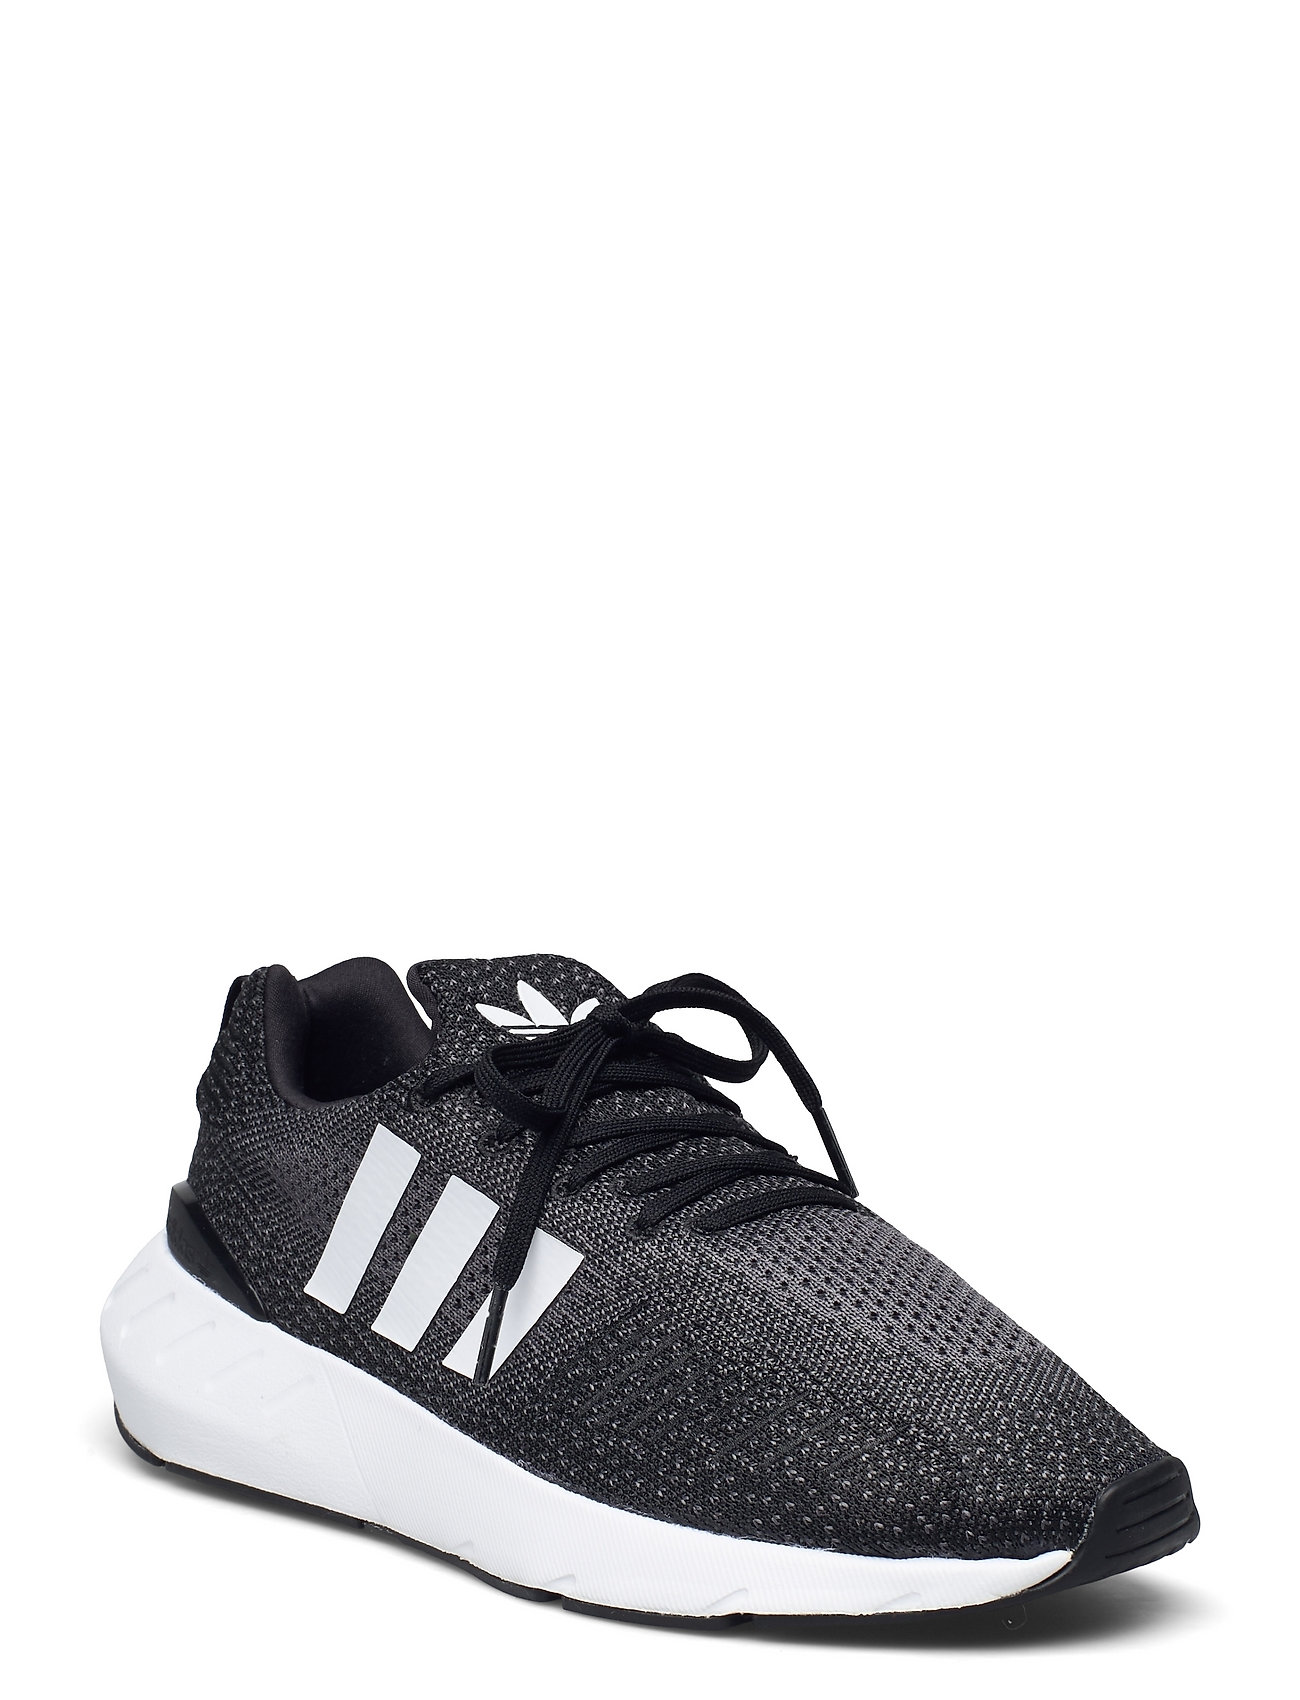 "adidas Originals" "Swift Run 22 Shoes Low-top Sneakers Black Adidas